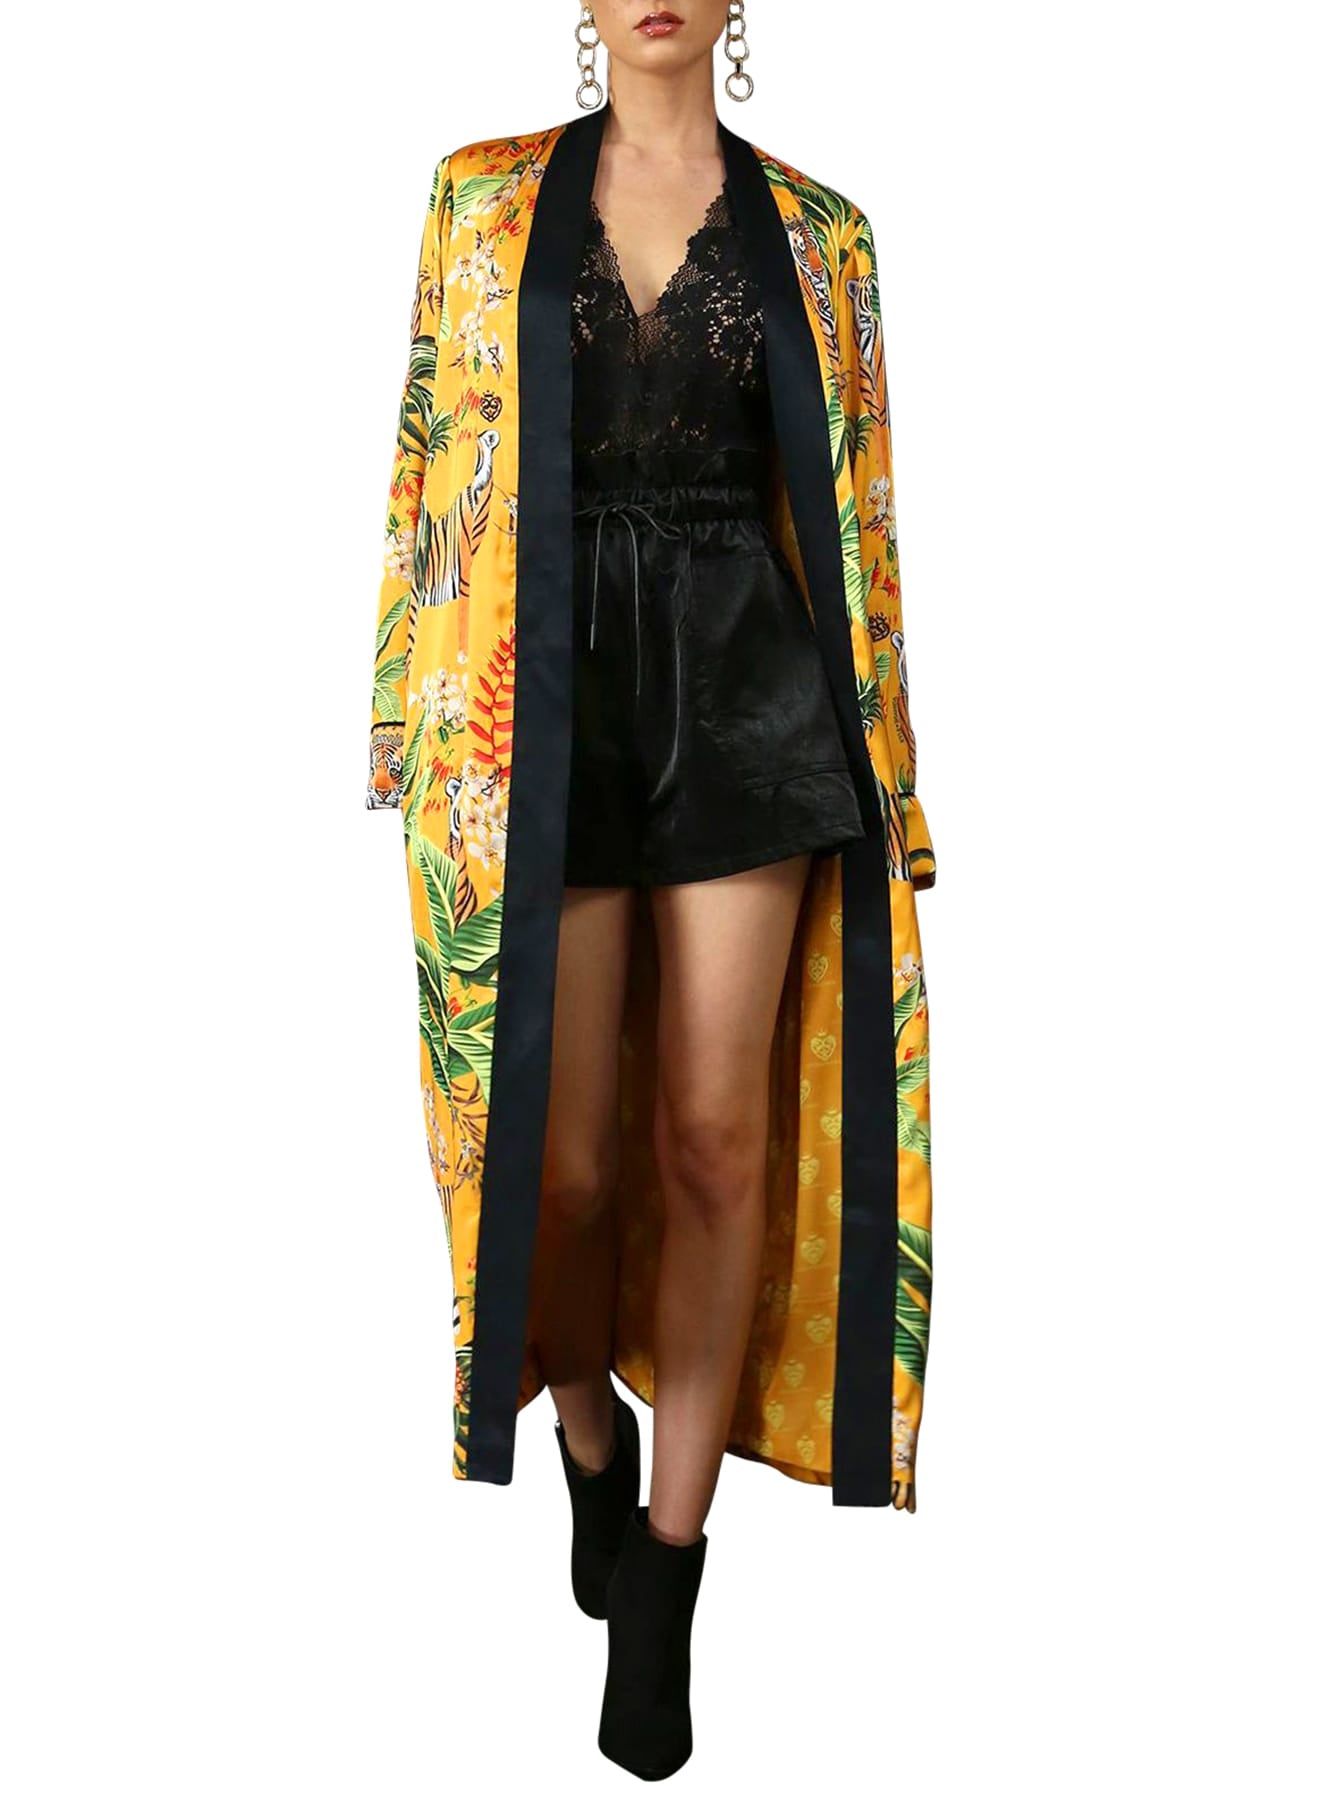 "sexy silk robe" "Kyle X Shahida" "silk kimono robes for women" "womens animal print robe" "long silk kimono"